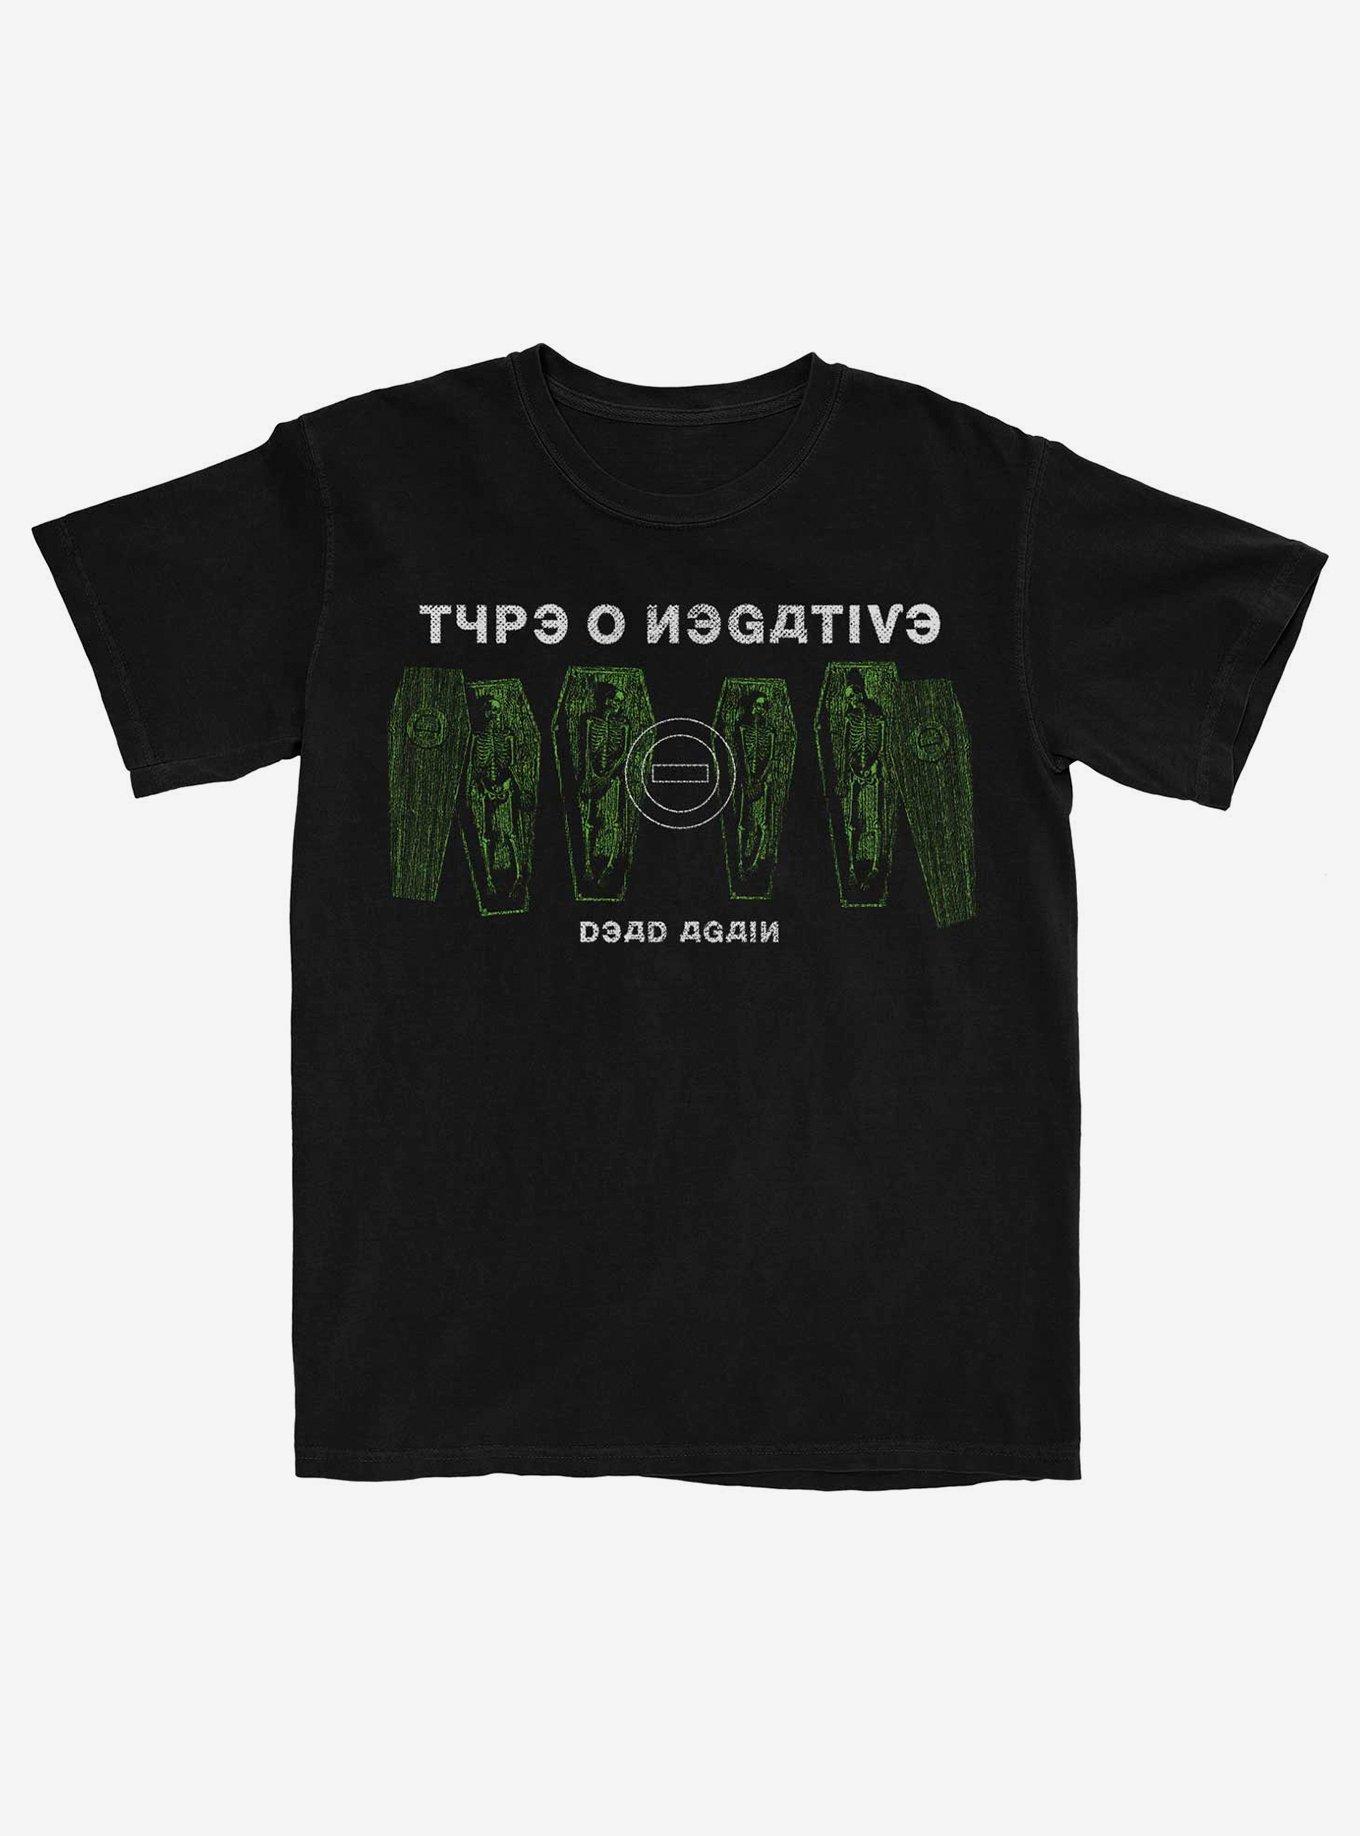 Type O Negative 'Halloween' (Black) T-Shirt